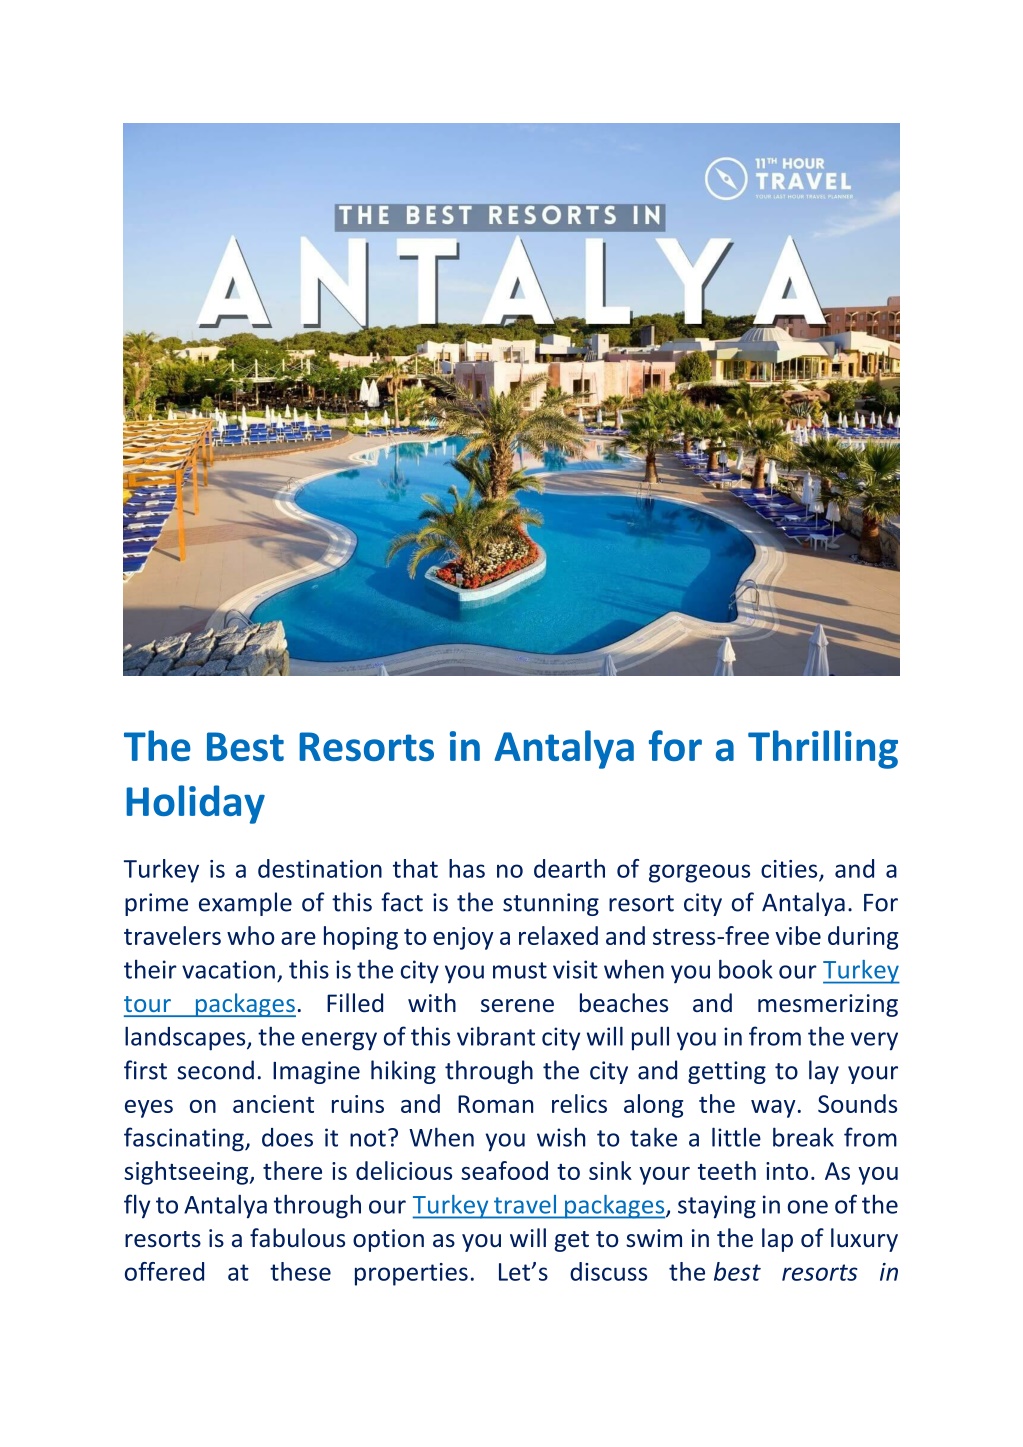 PPT - Best Resorts in Antalya | 11th Hour Travel PowerPoint ...